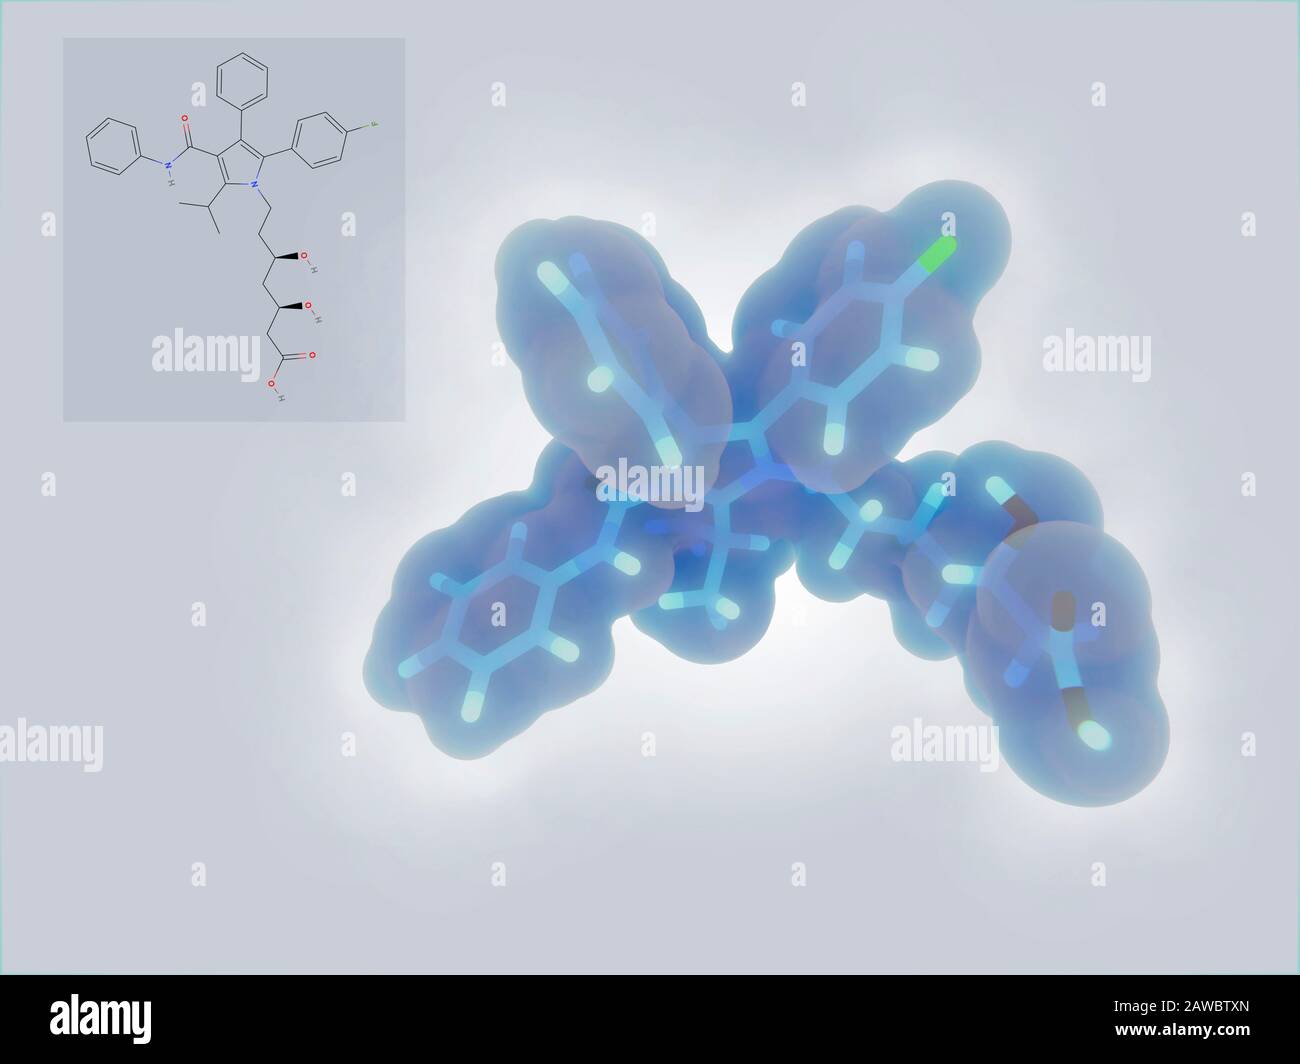 Atorvastatin Drug Molecule, Abbildung Stockfoto